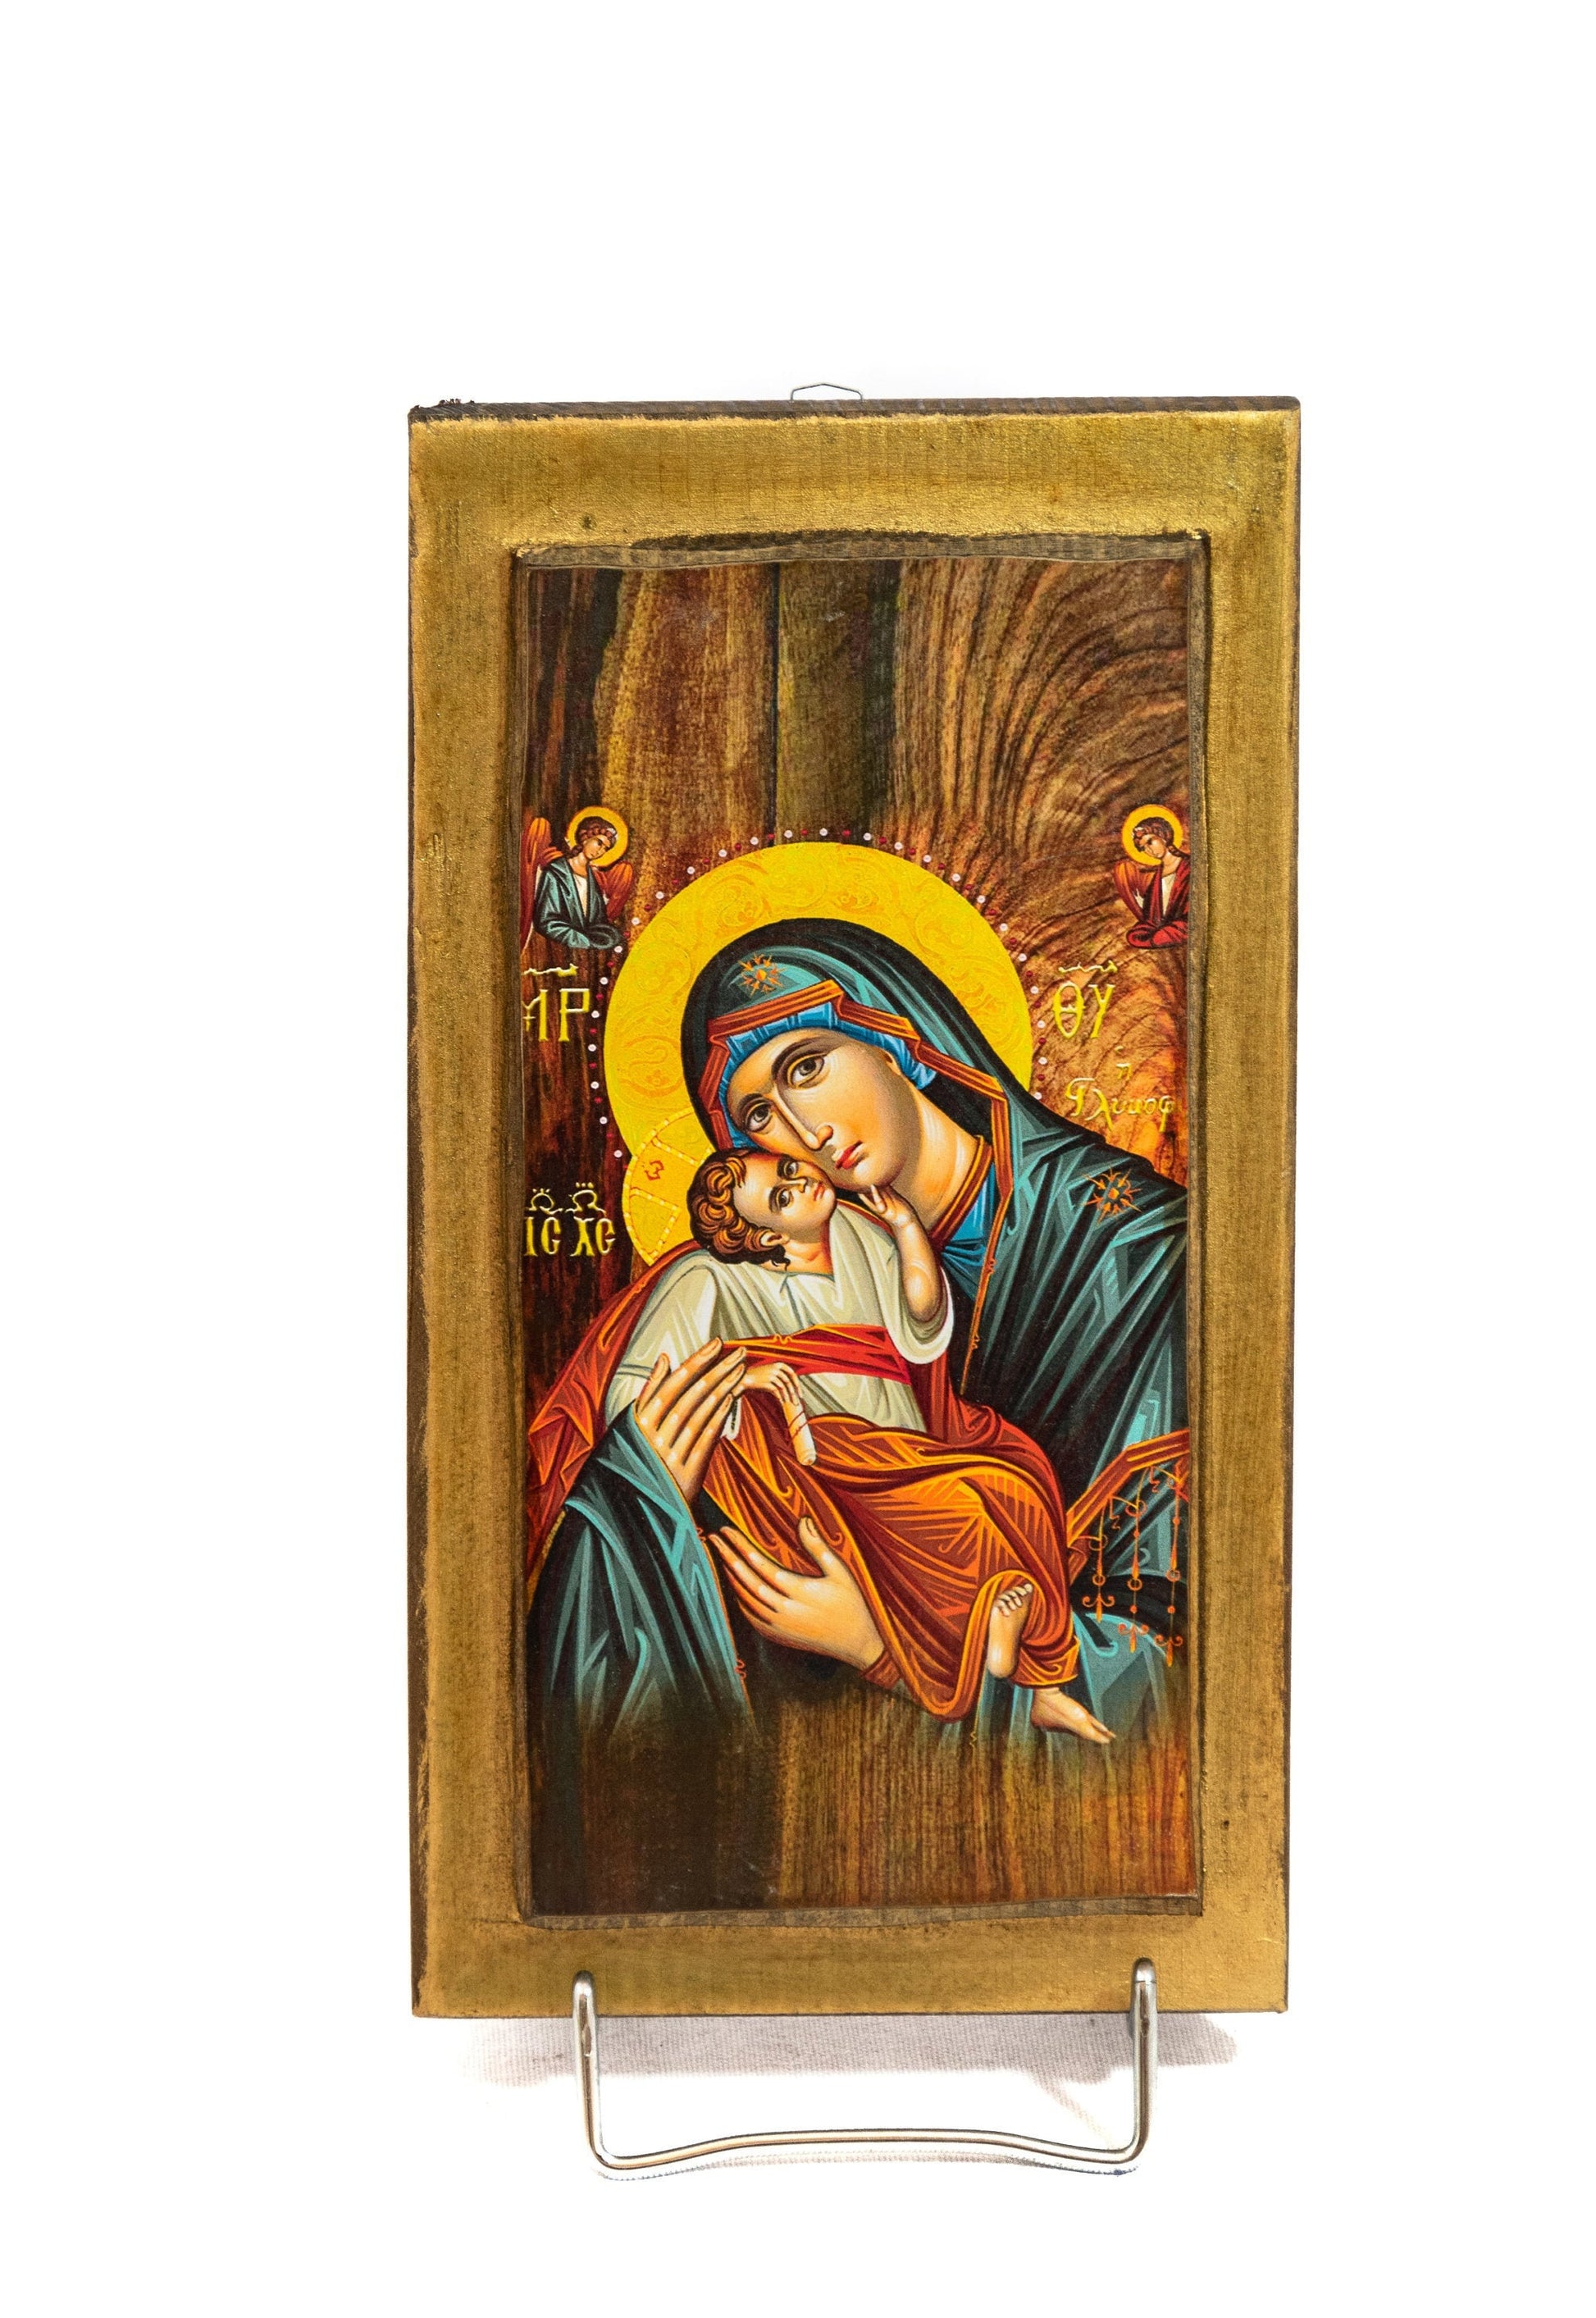 Virgin Mary icon Panagia Glykophilousa Greek Christian Orthodox Icon Mother of God Byzantine art Theotokos handmade wall hanging wood plaque TheHolyArt